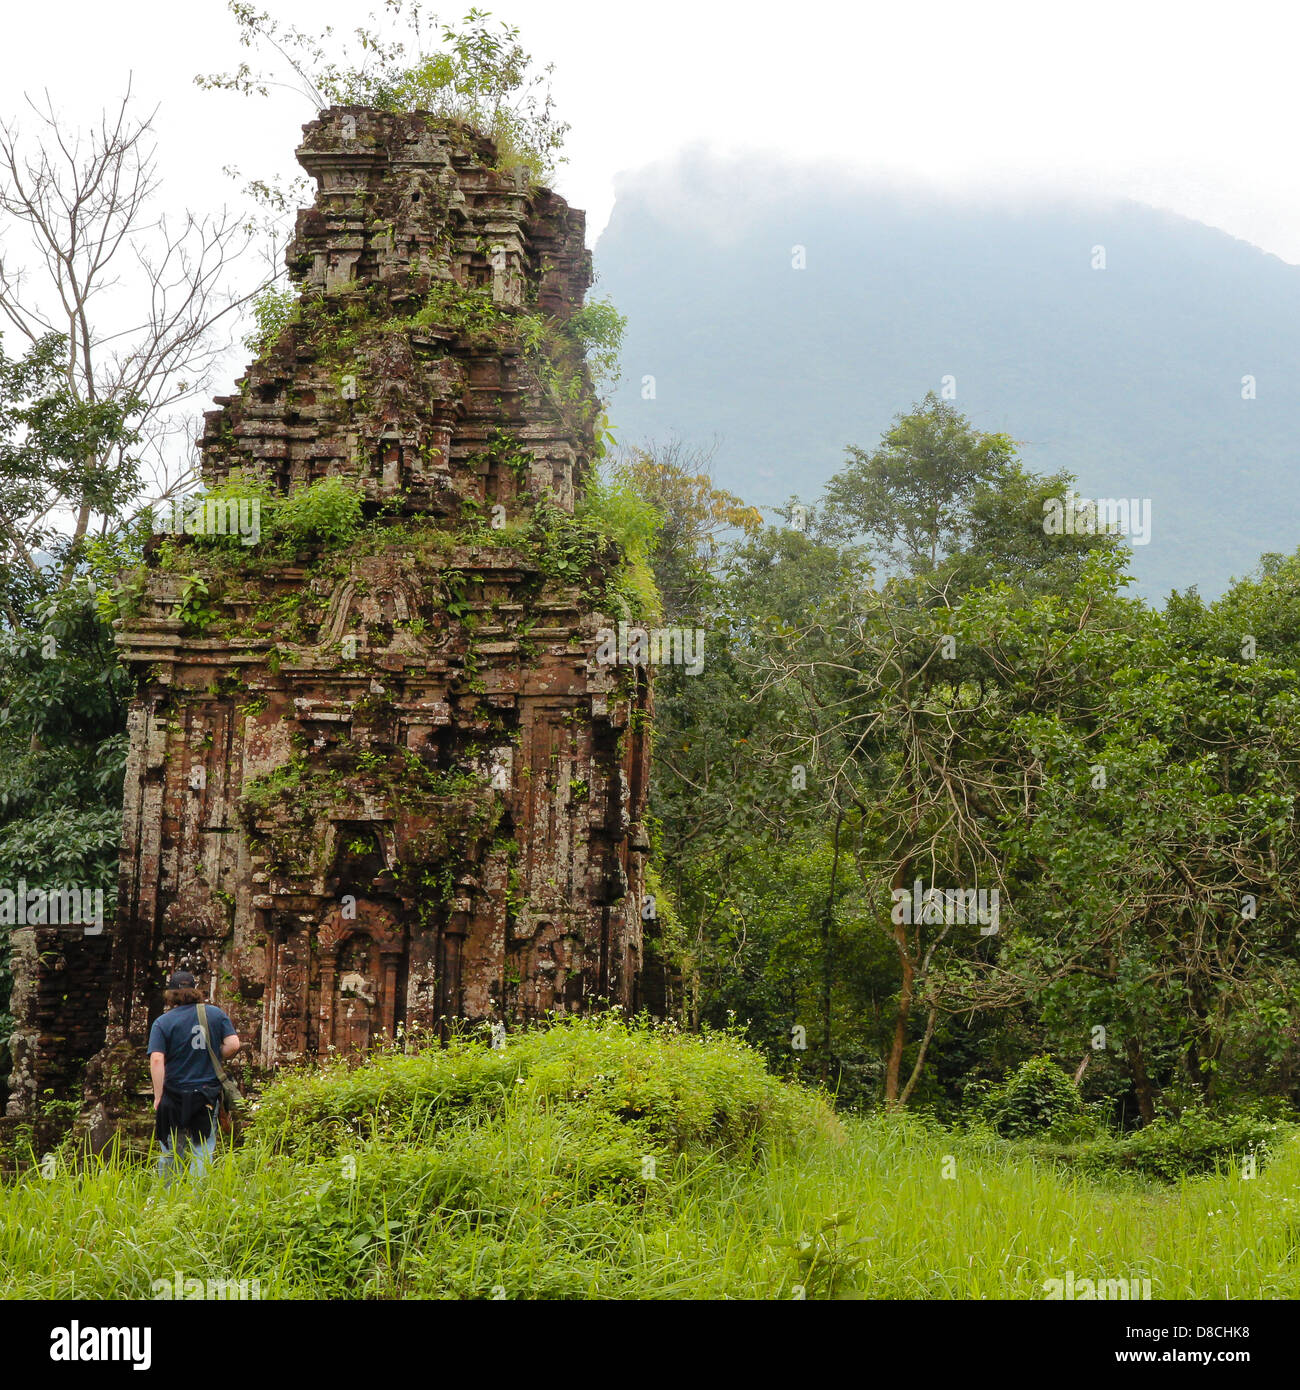 Mỹ Sơn Sanctuary Vietnam (UNESCO world heritage site) Stock Photo